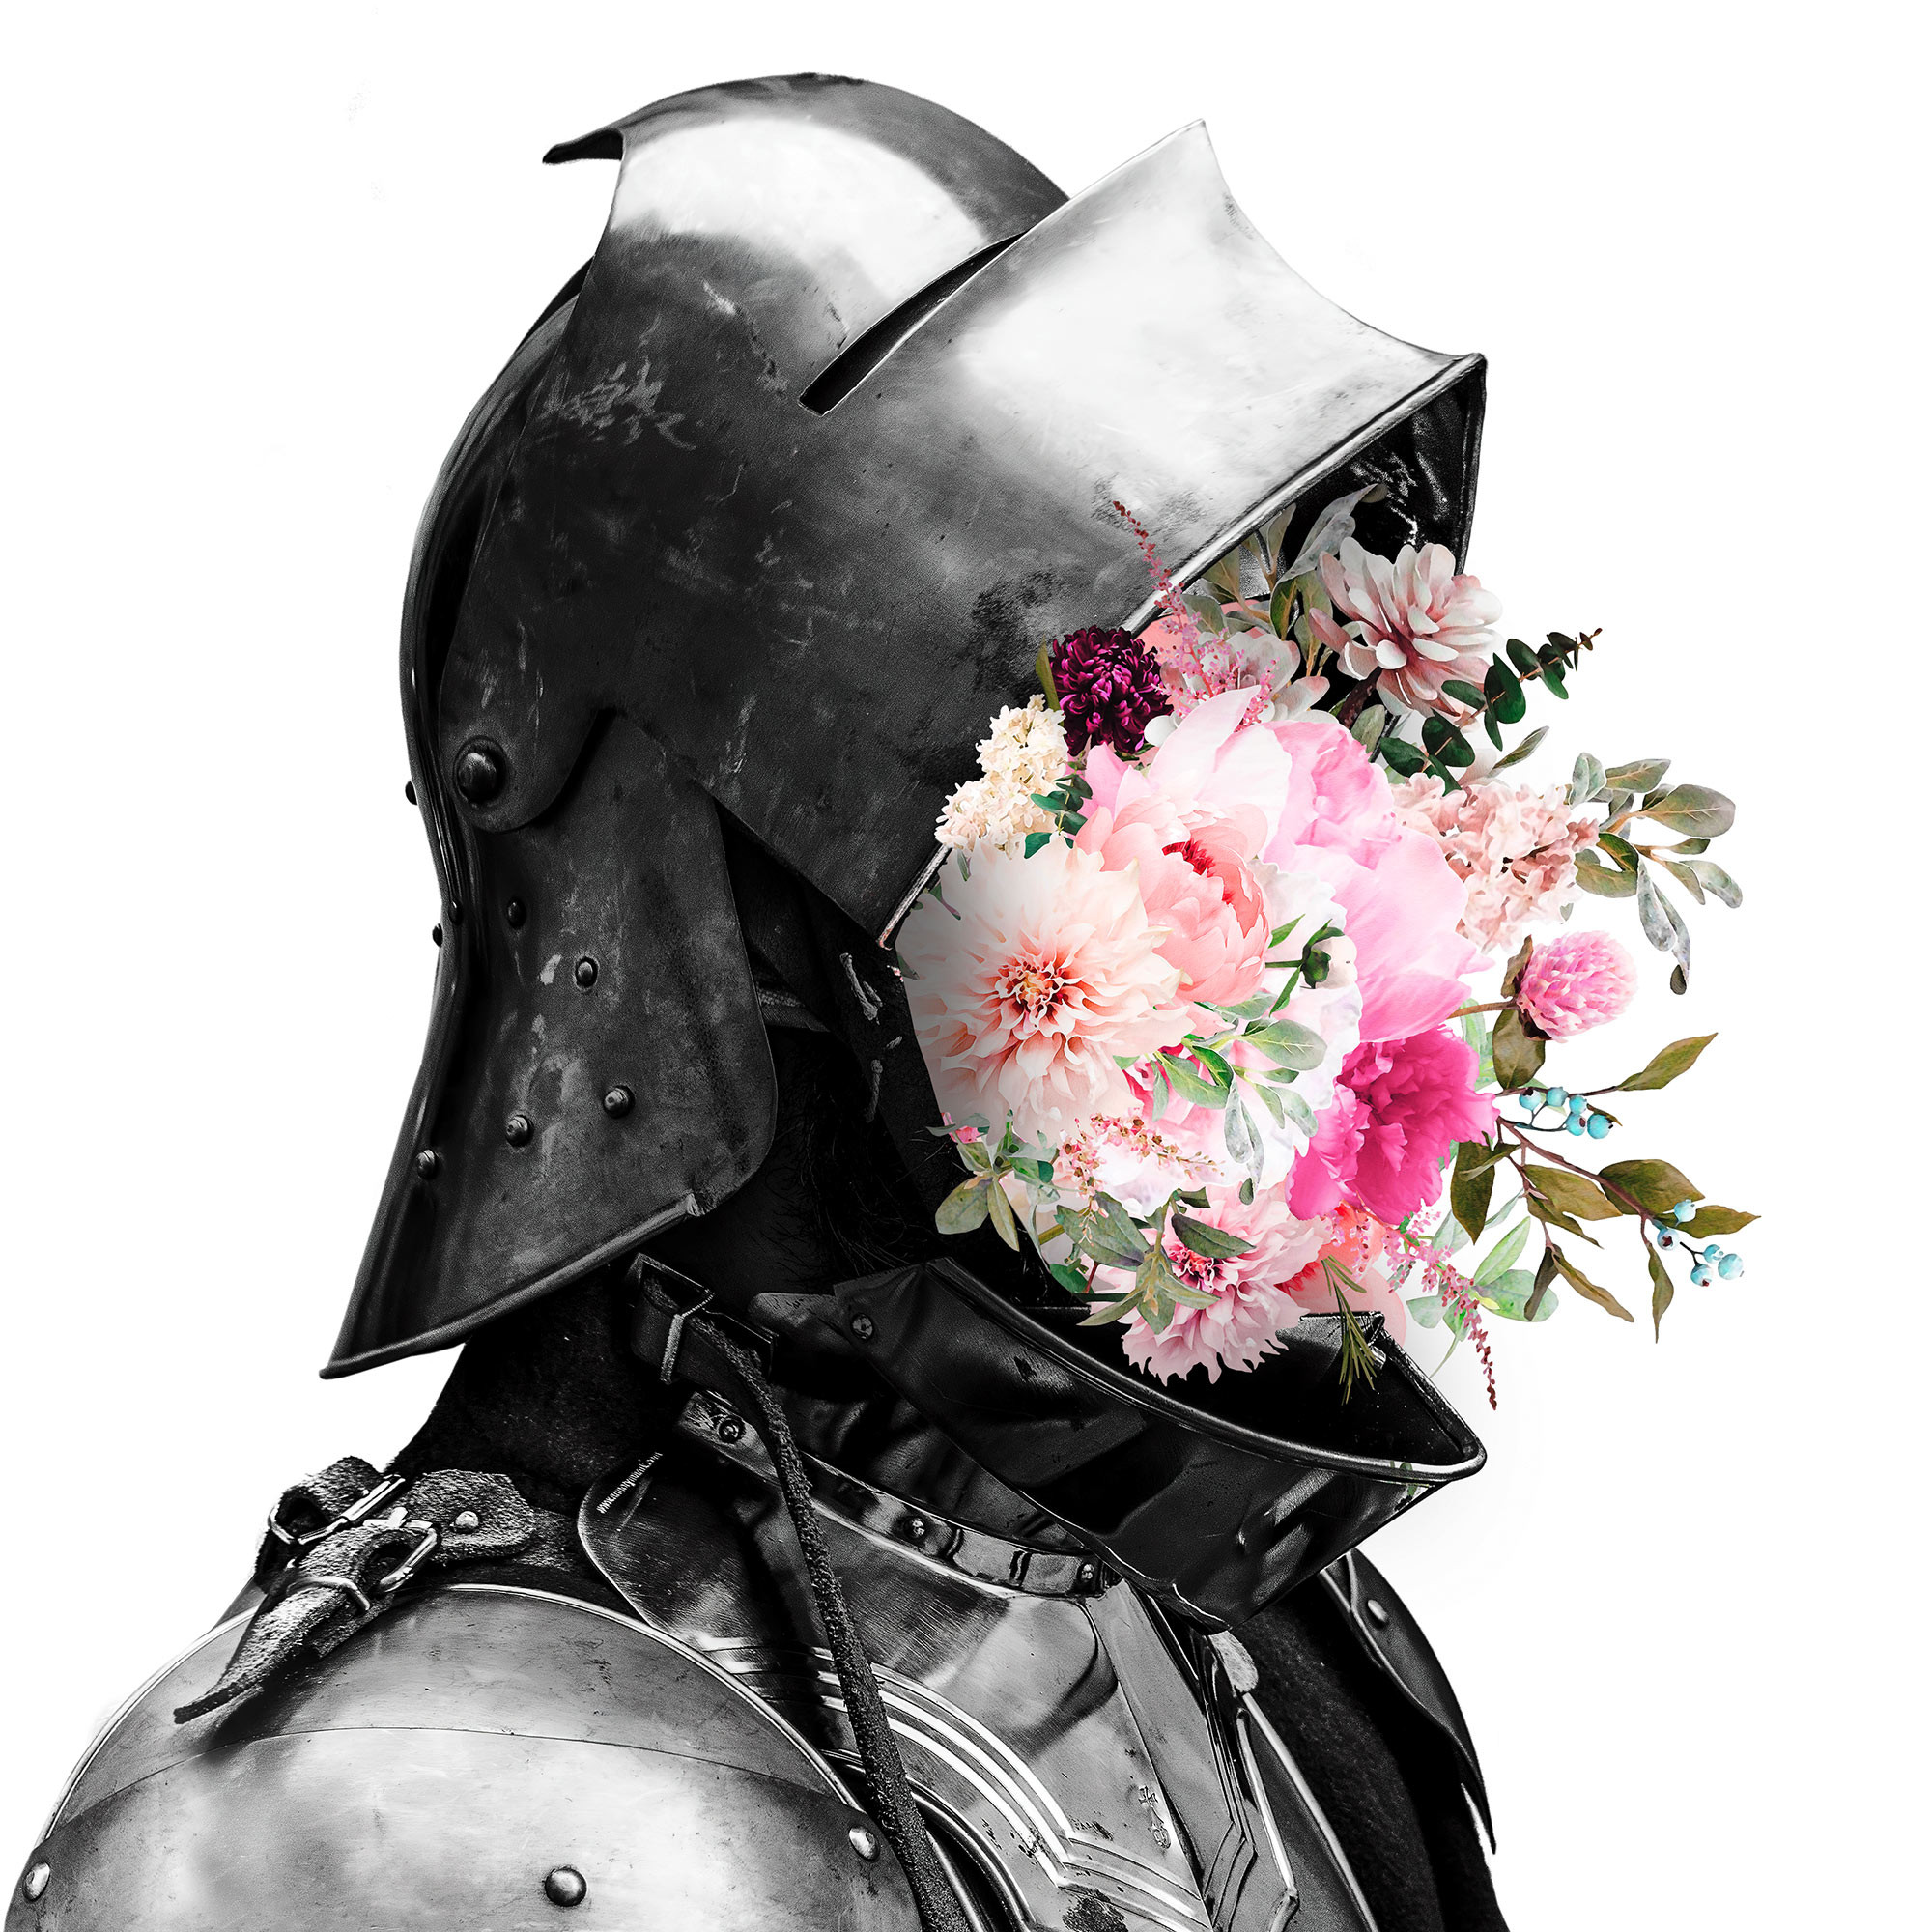 Sir Flowerhead